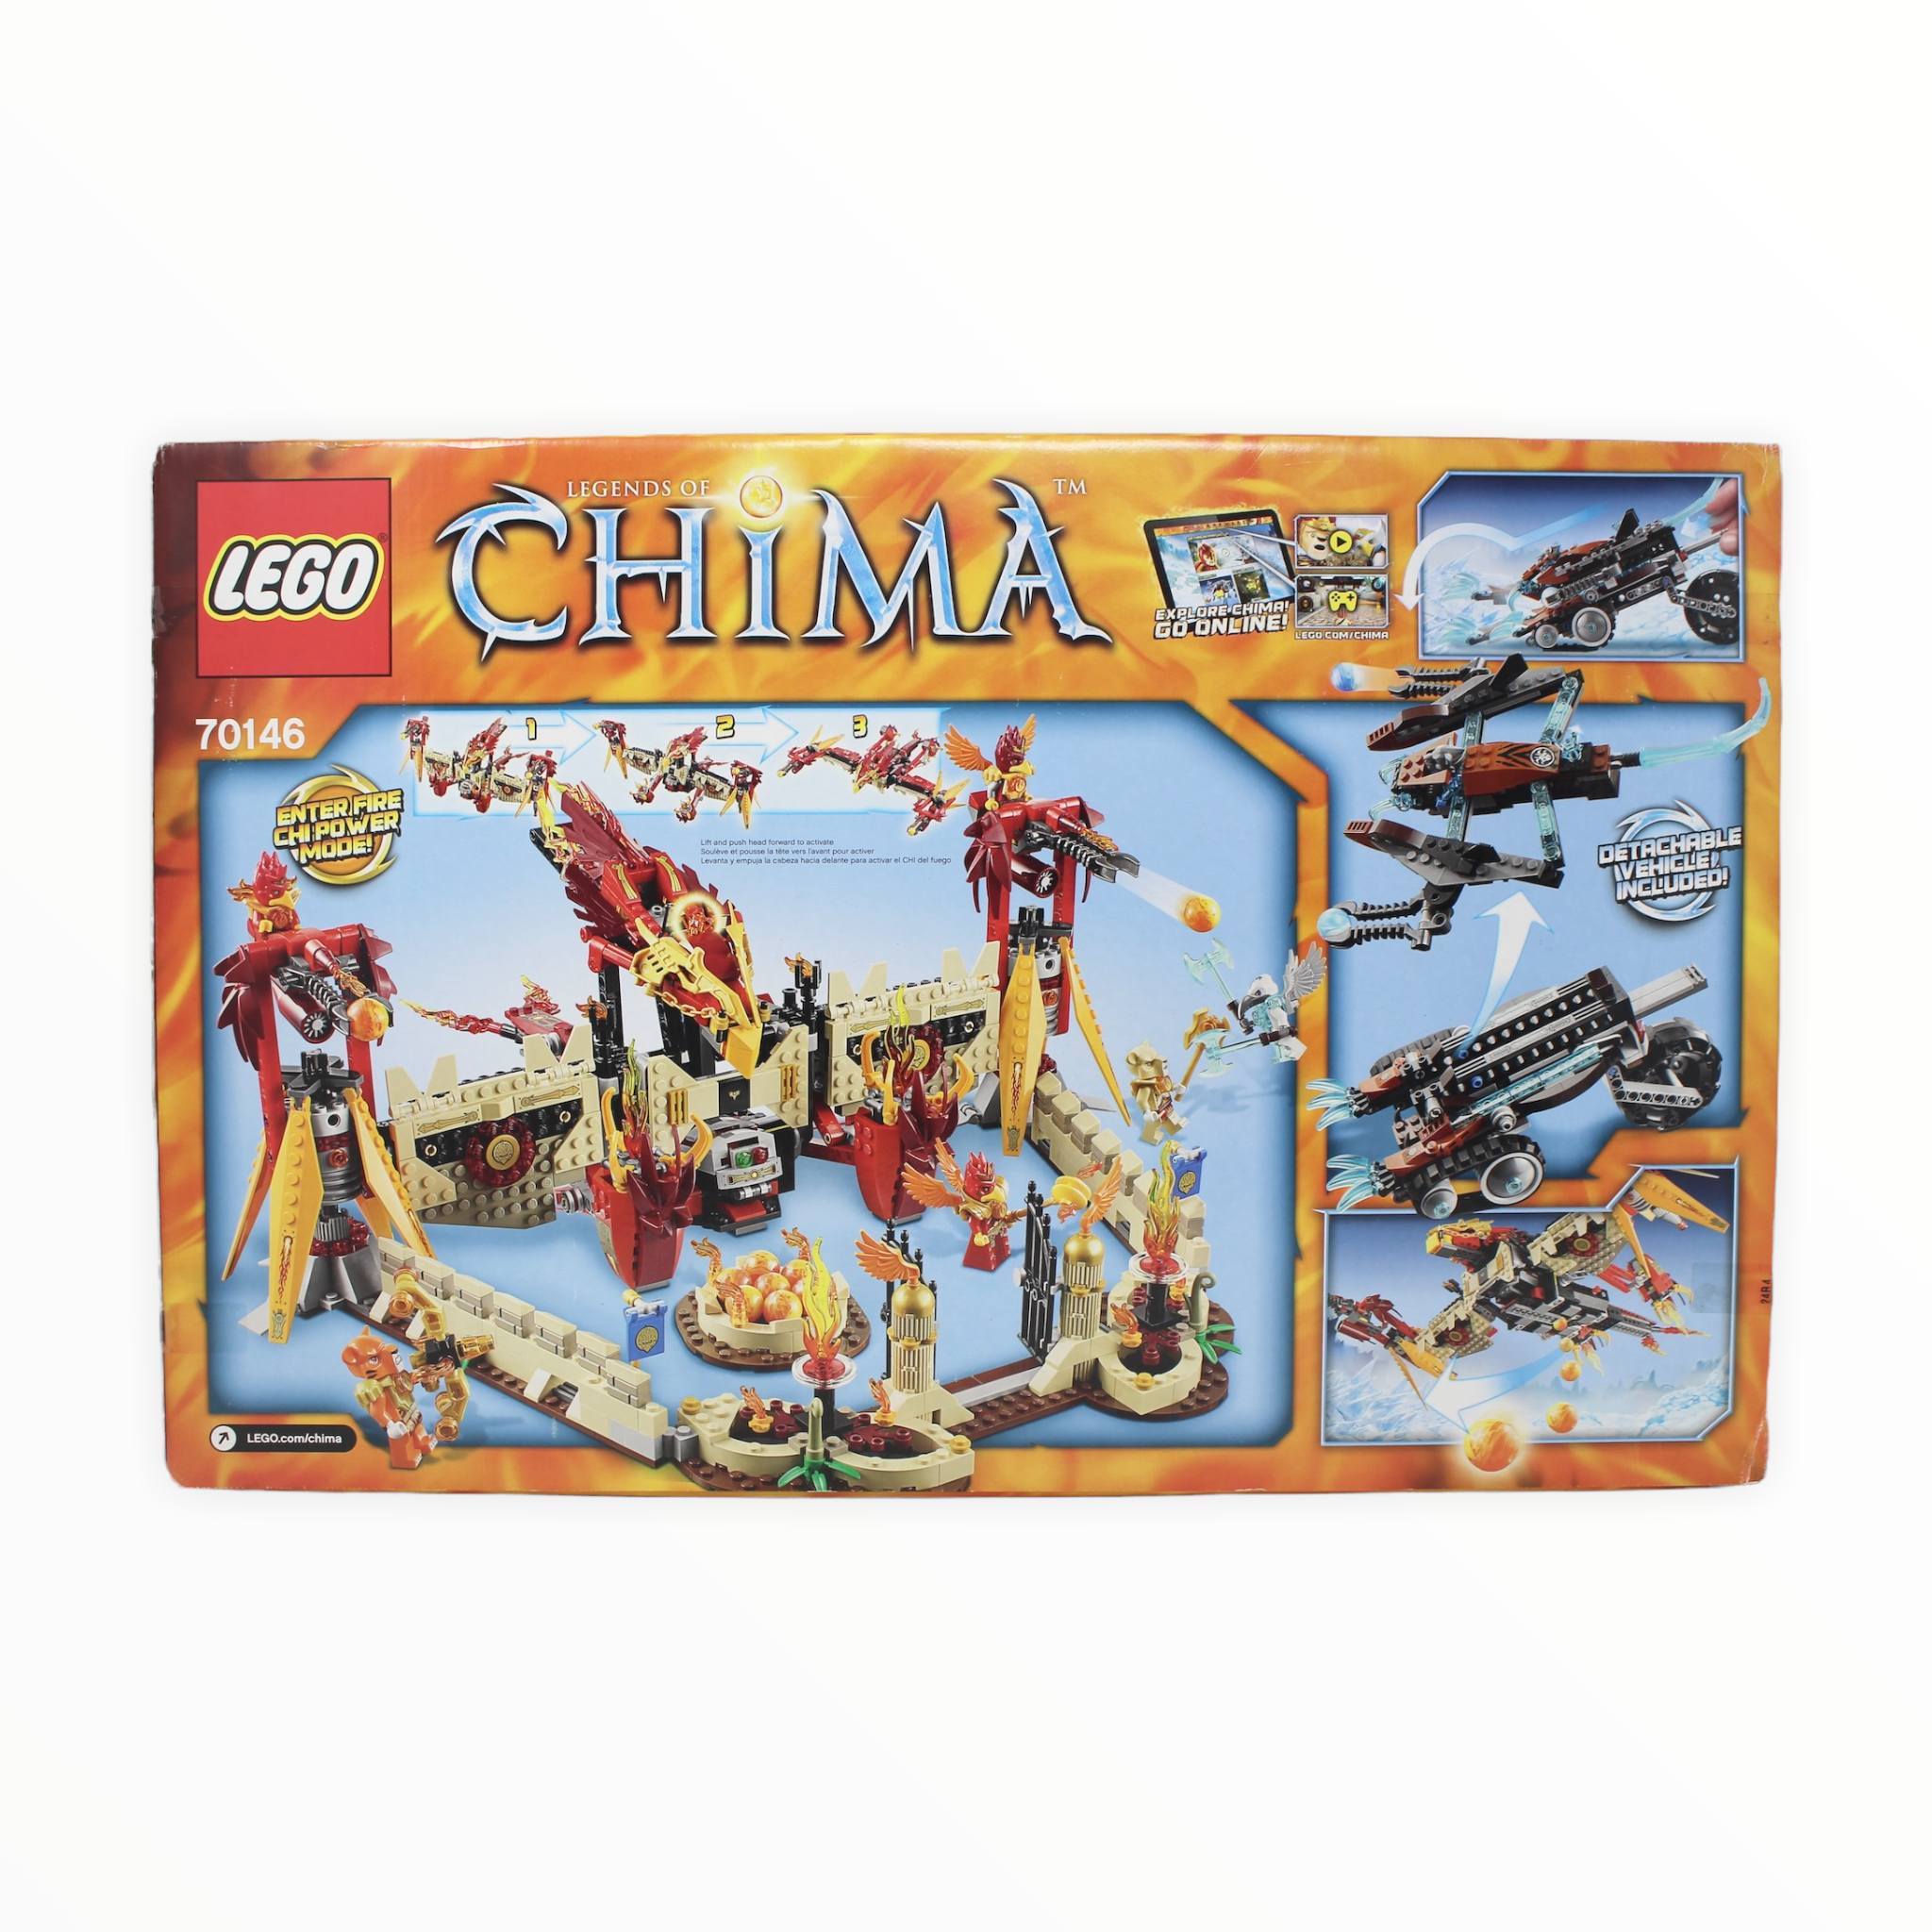 Retired Set 70146 Legends of Chima Flying Phoenix Fire Temple